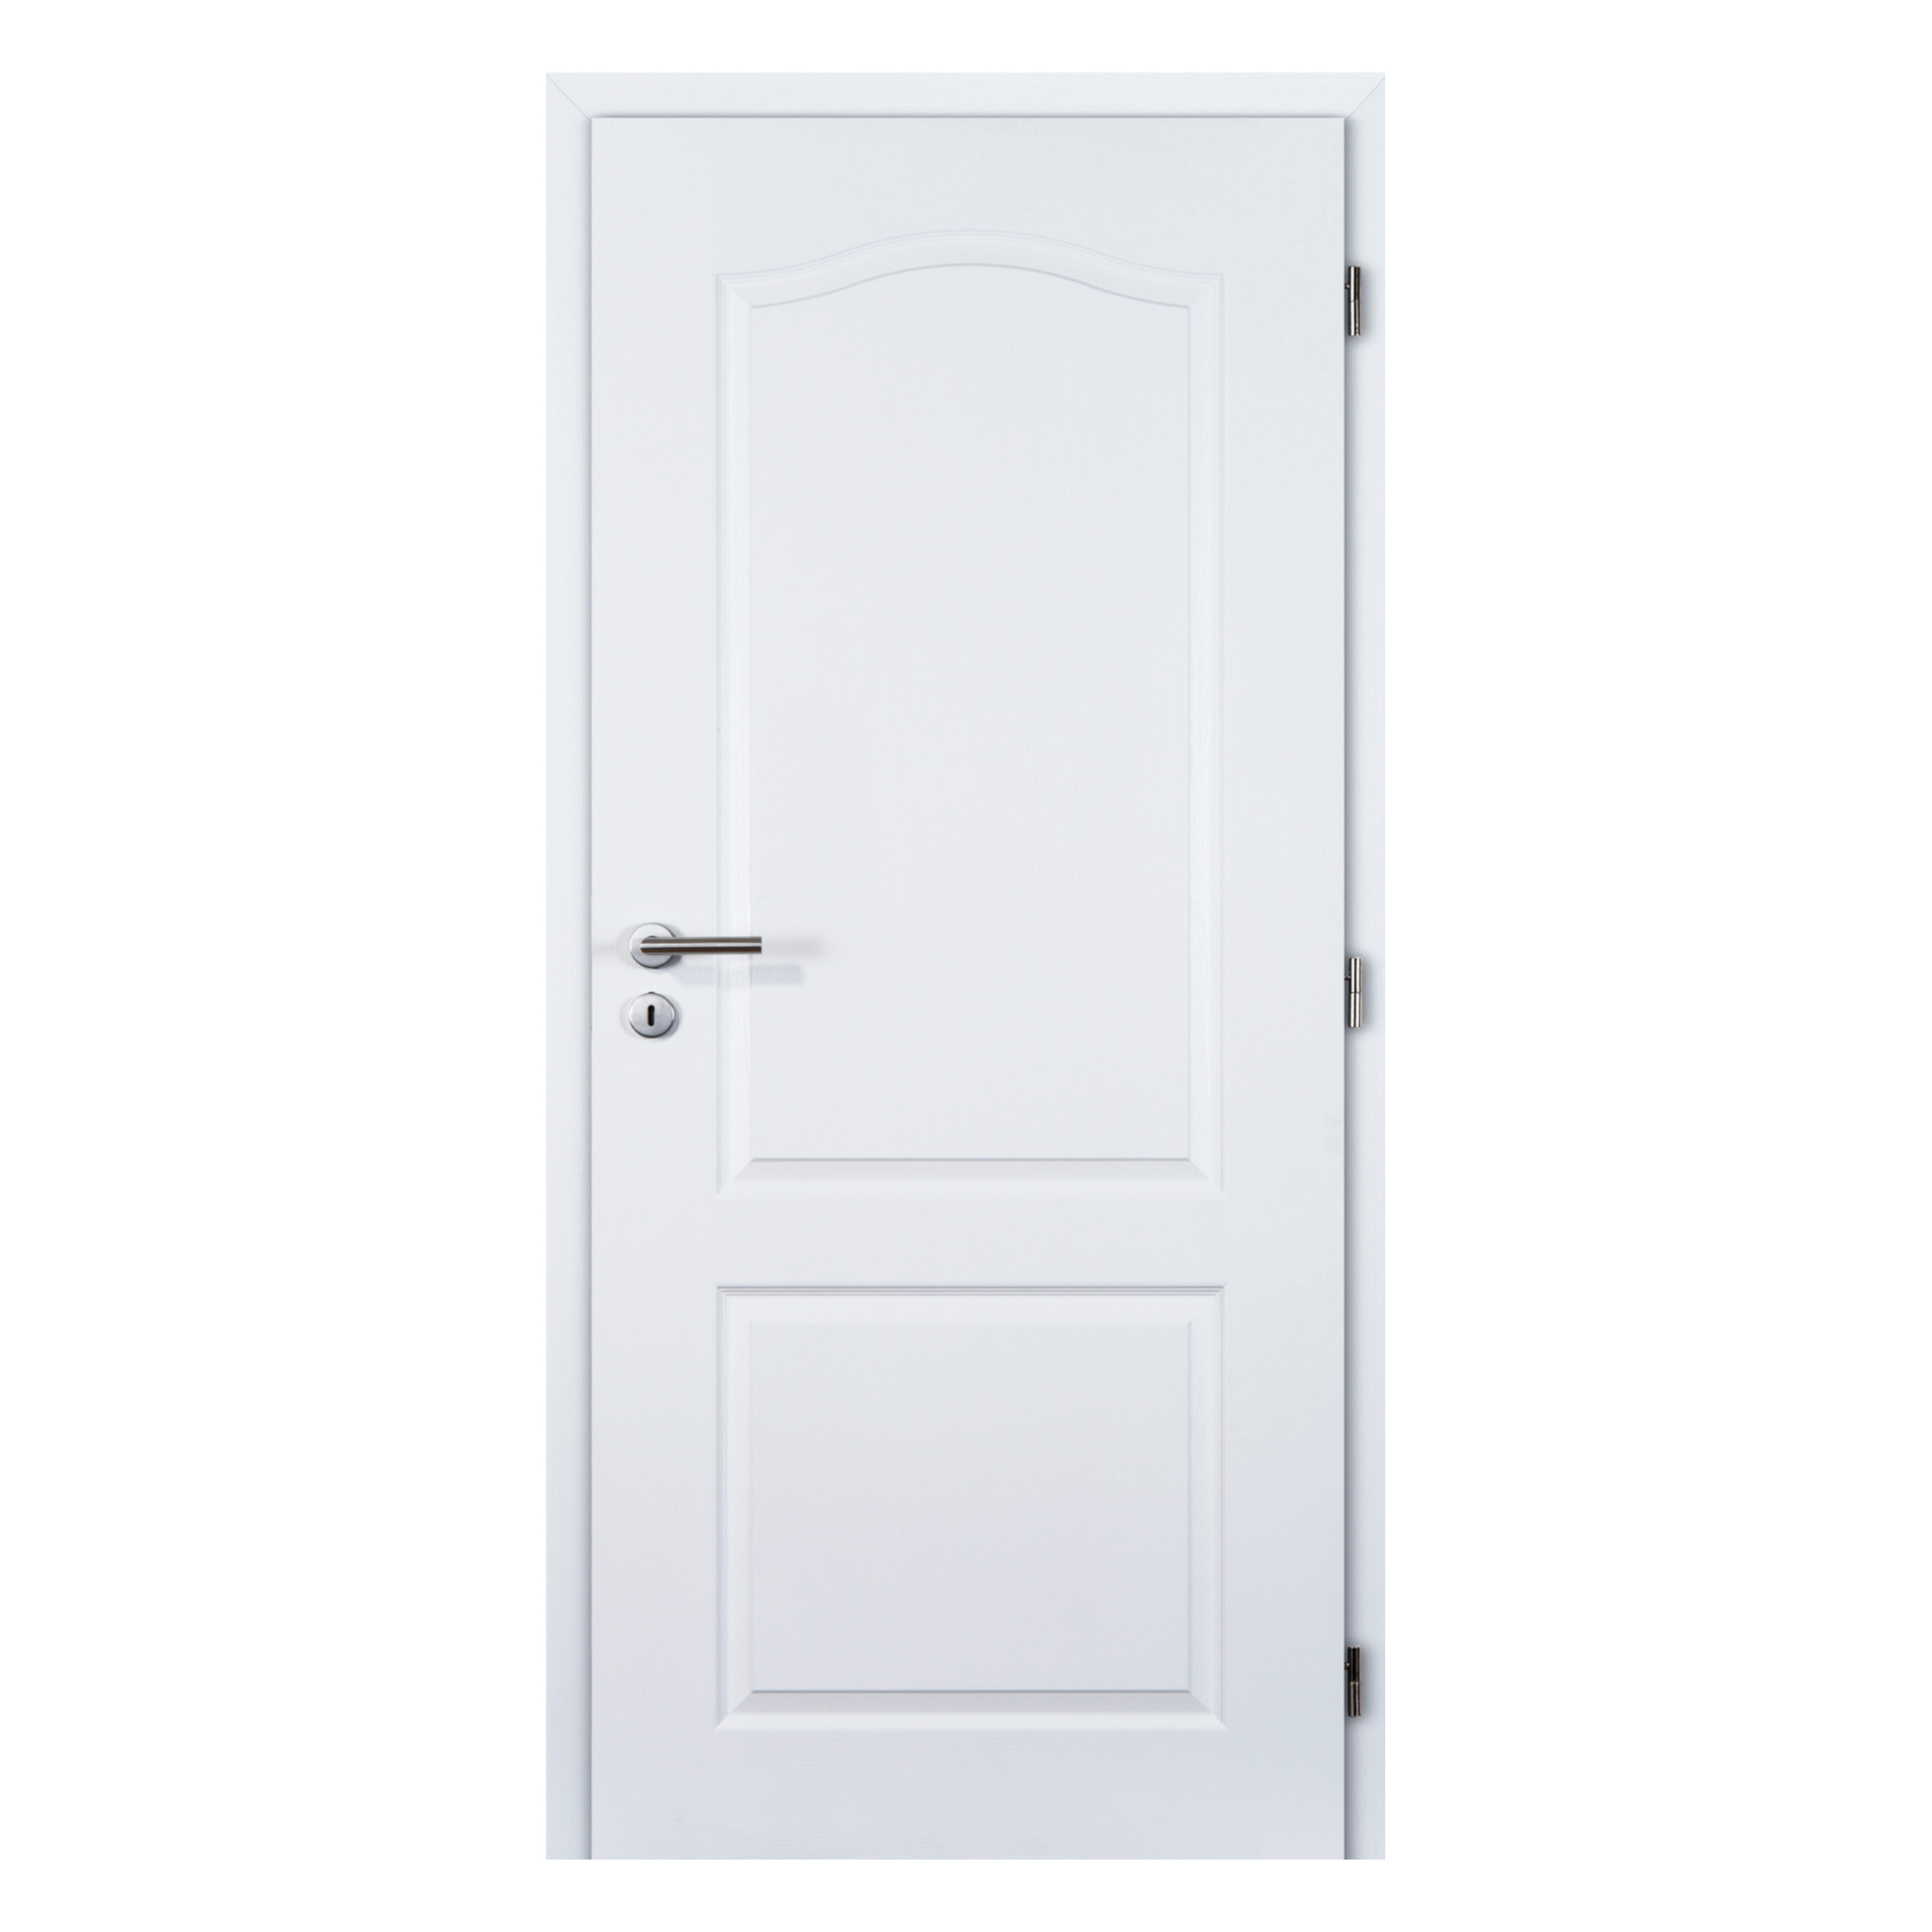 Dveře plné profilované Doornite Claudius bílé pravé 800 mm